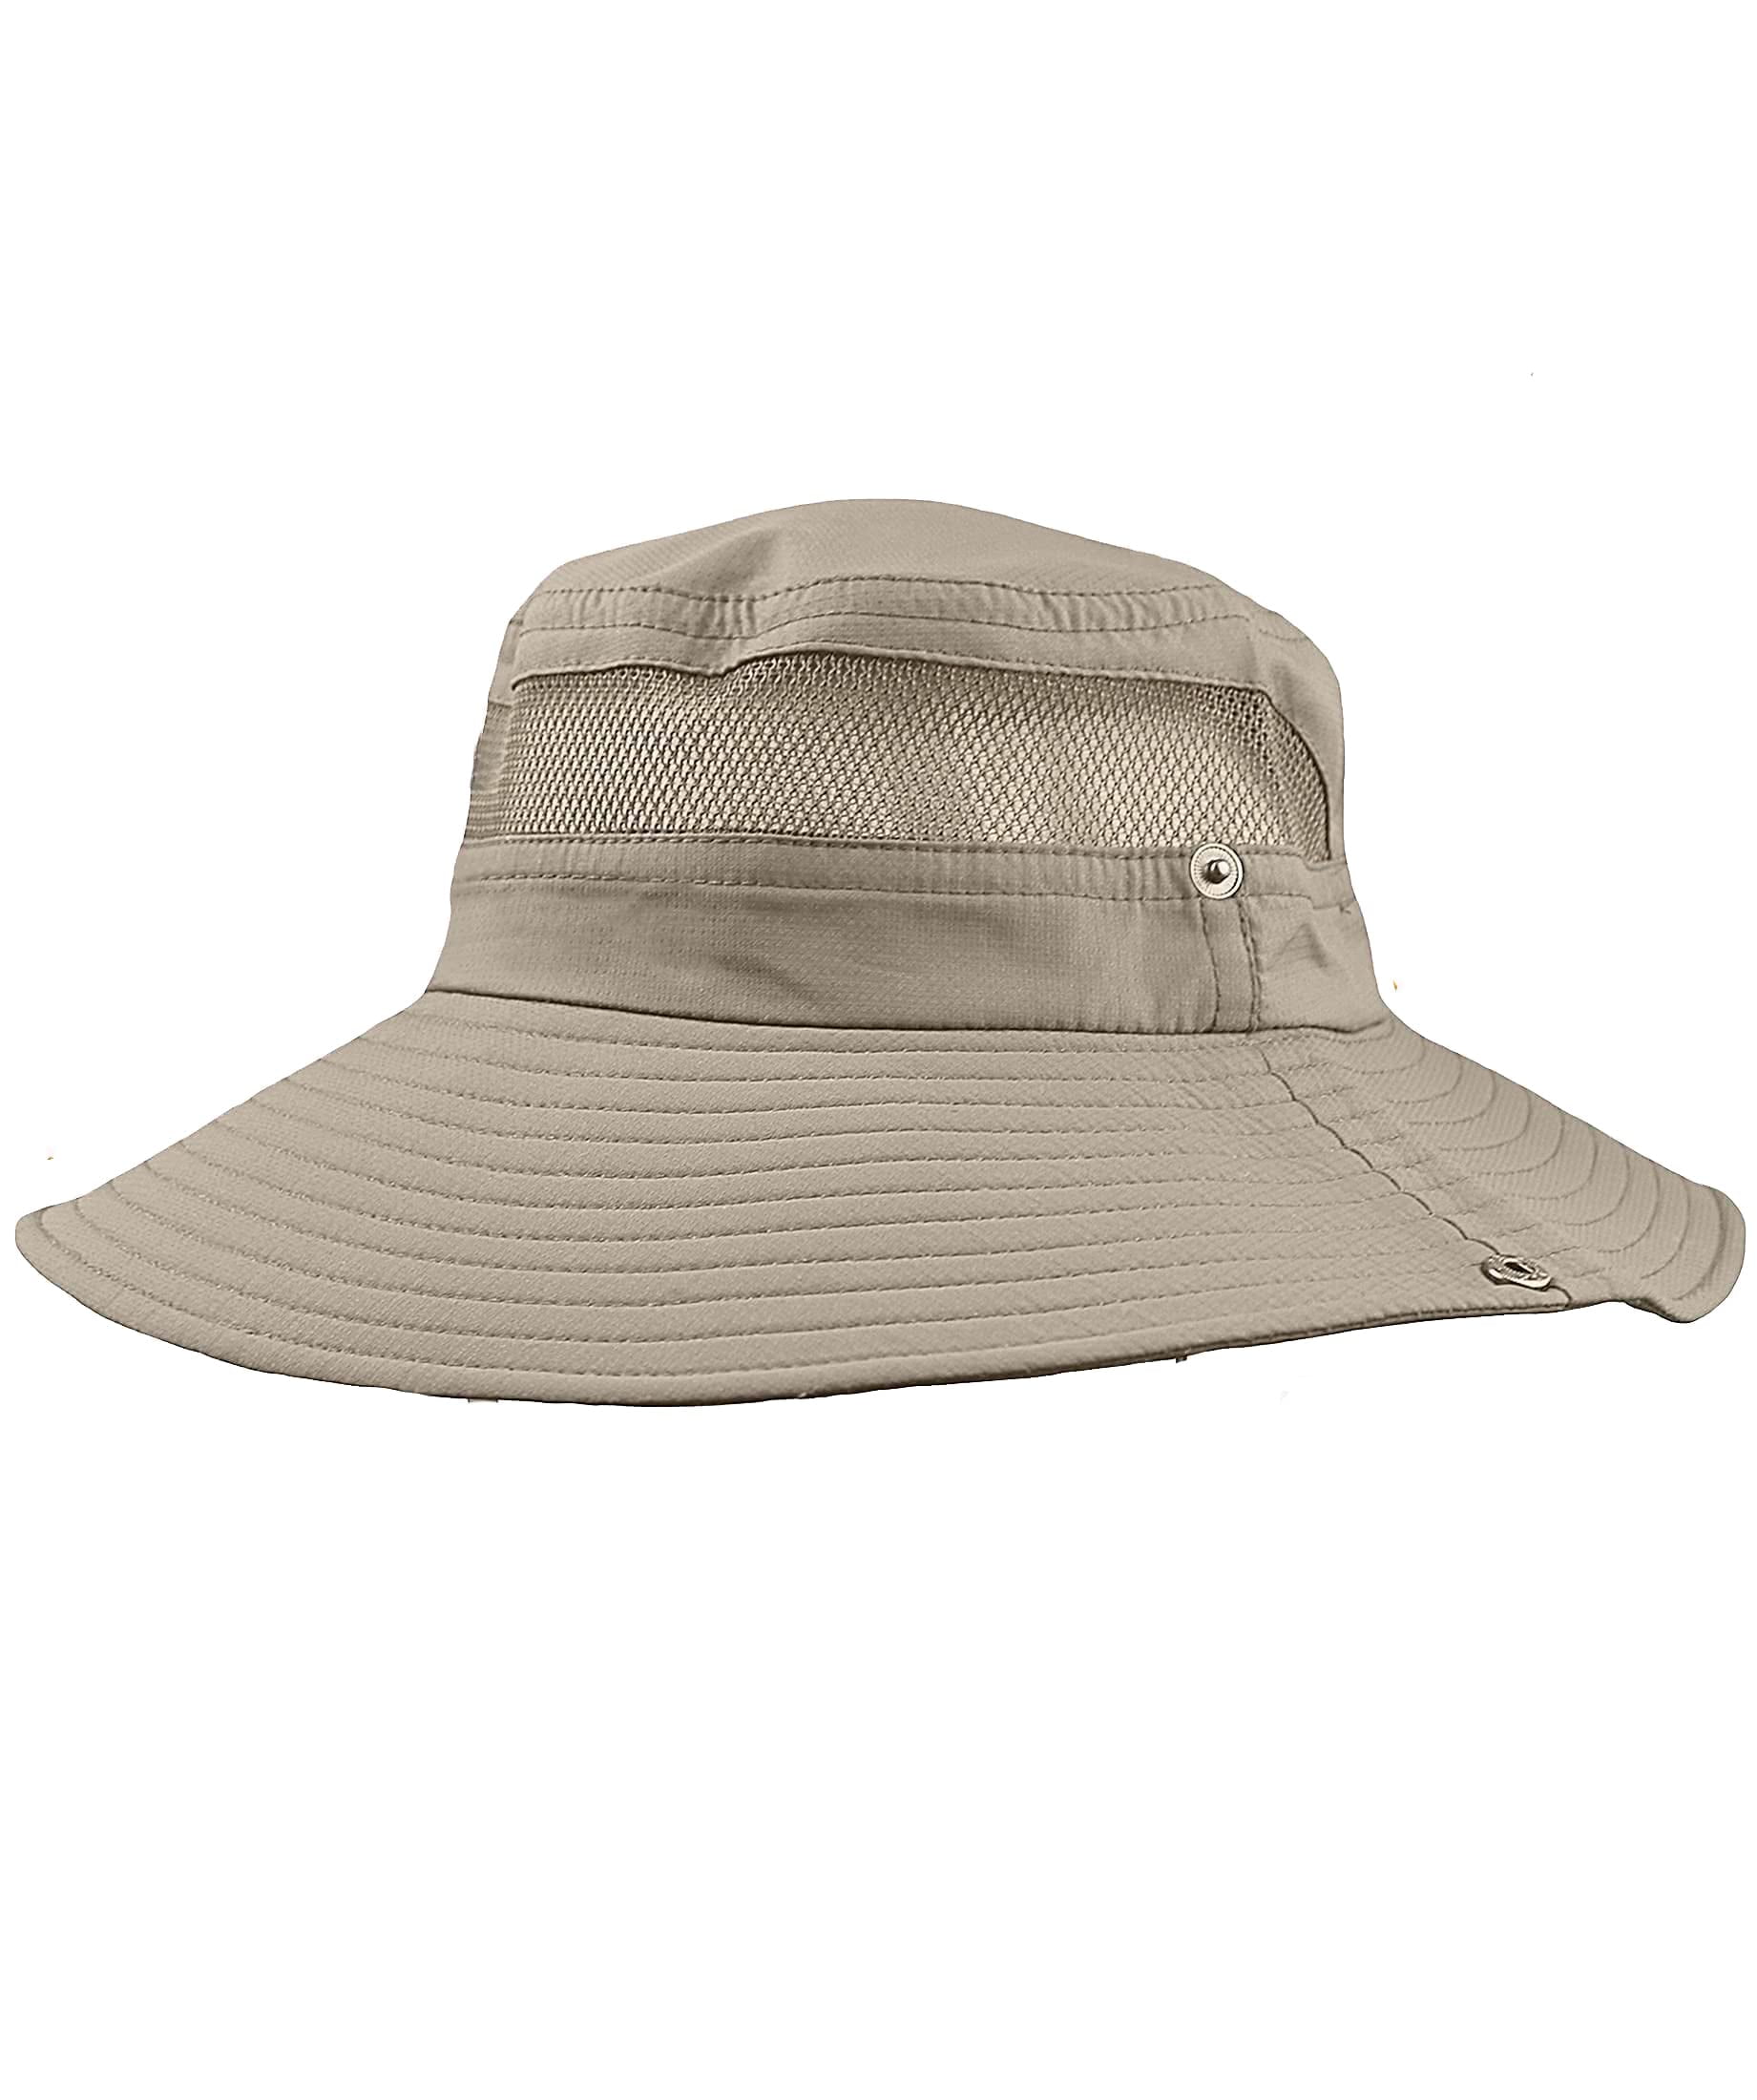 GearTOP Wide Brim Sun Hat for Women - Mens Bucket Hats for Hiking - Sun Hat  Wome